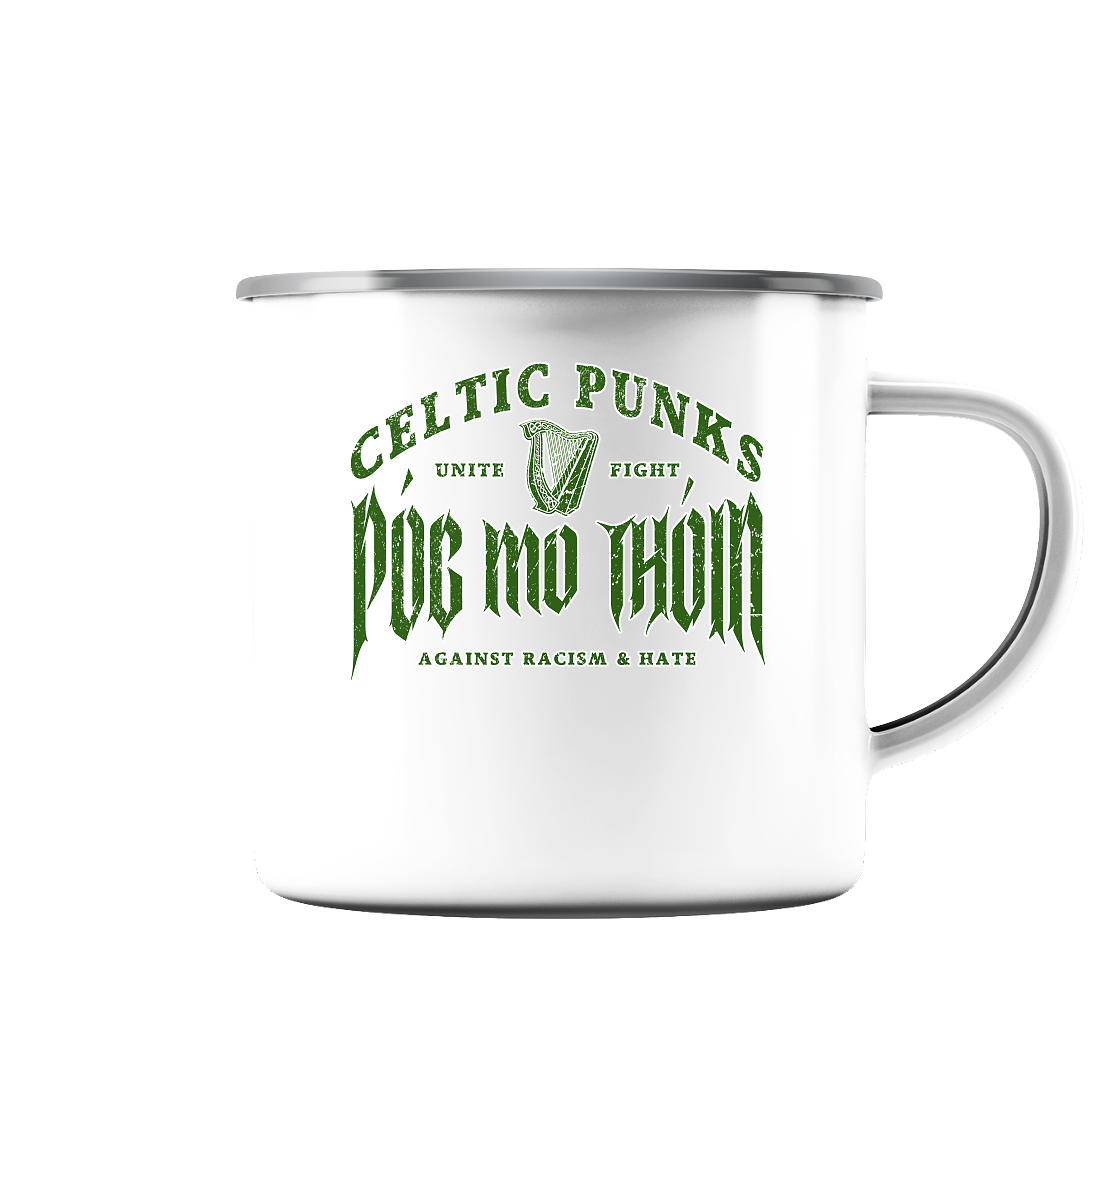 Póg Mo Thóin Streetwear "Celtic Punks Against Racism & Hate / Unite & Fight" - Emaille Tasse (Silber)